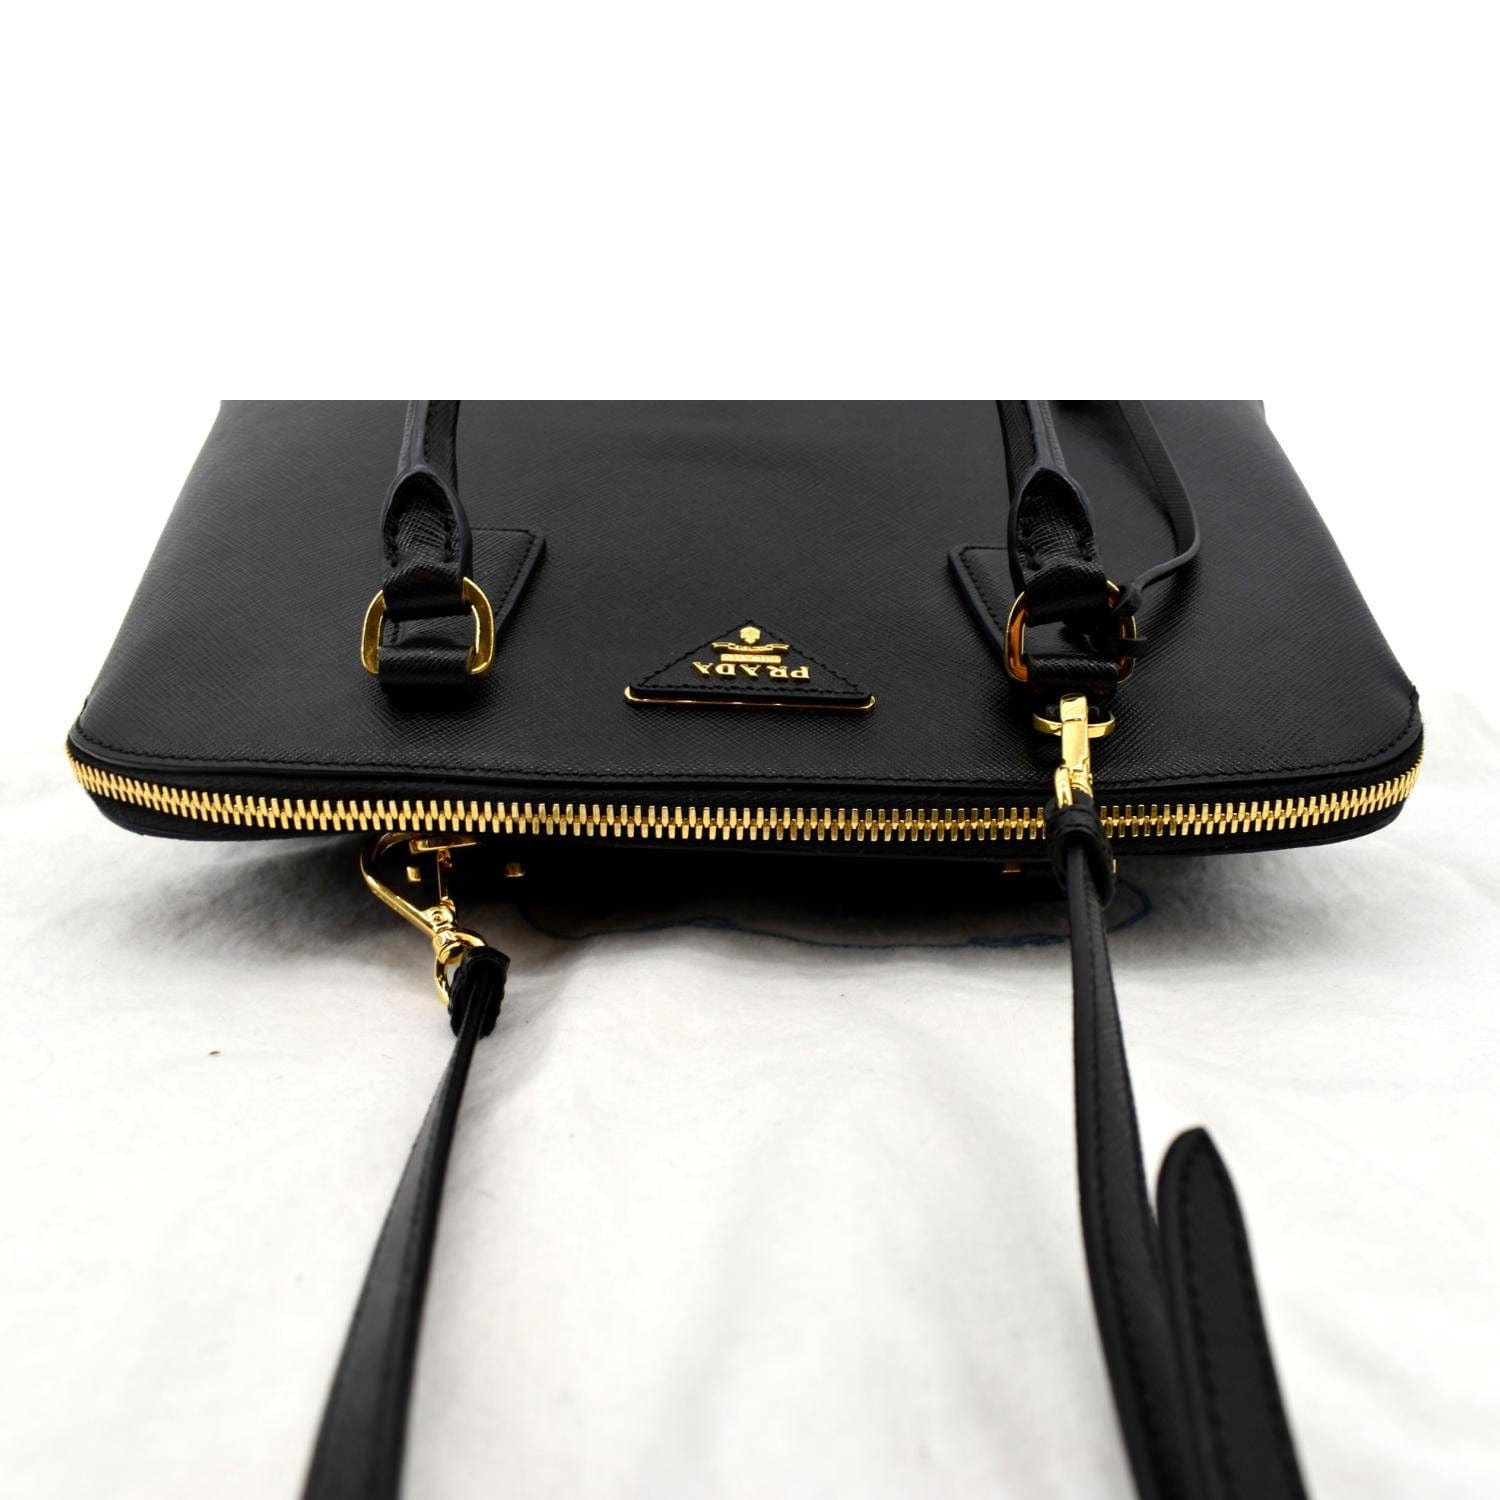 PRADA Promenade Handbag Saffiano Leather, Medium With Strap